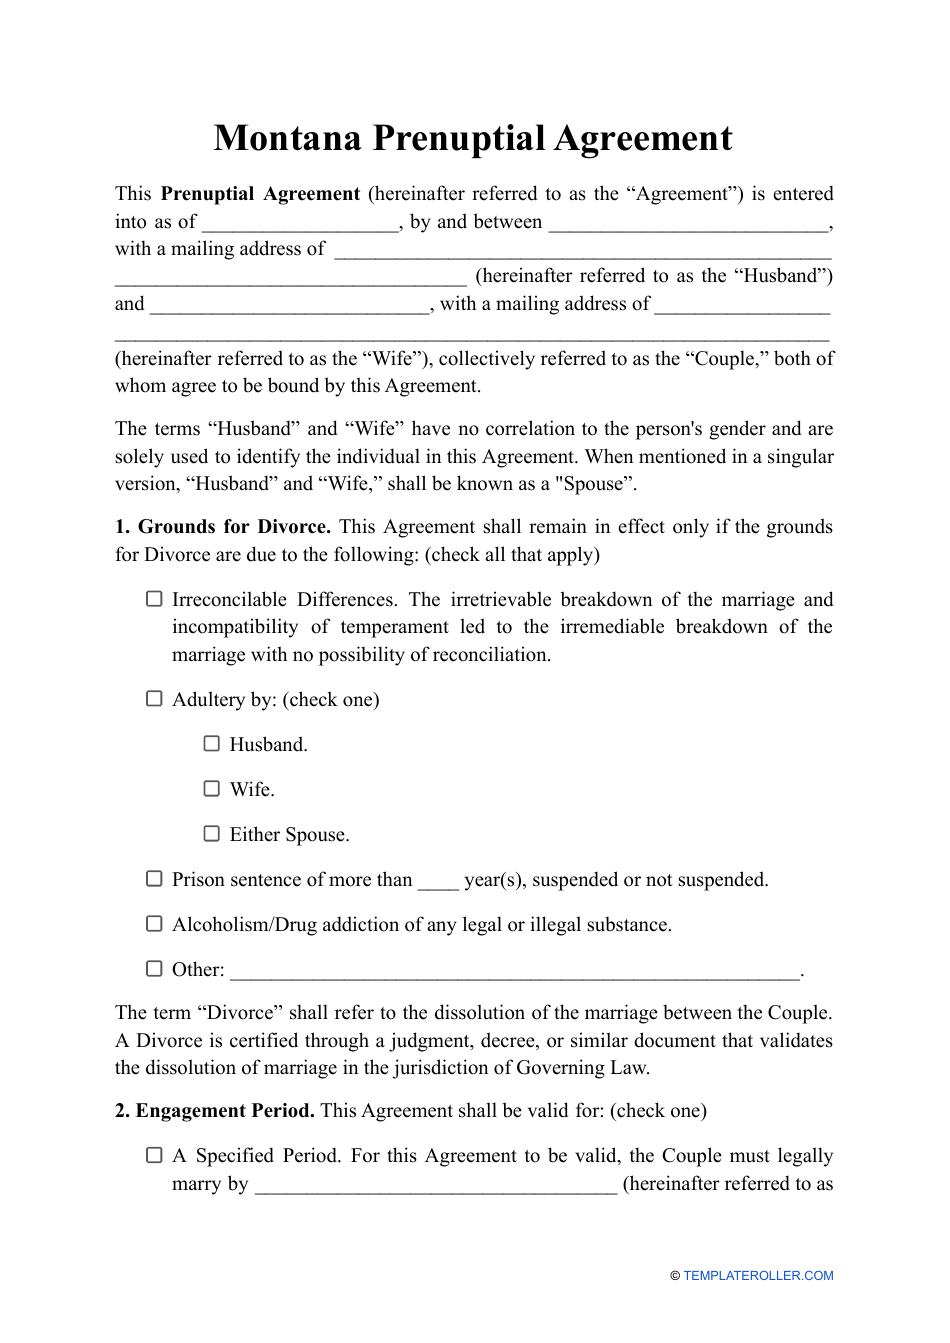 Prenuptial Agreement Template - Montana, Page 1